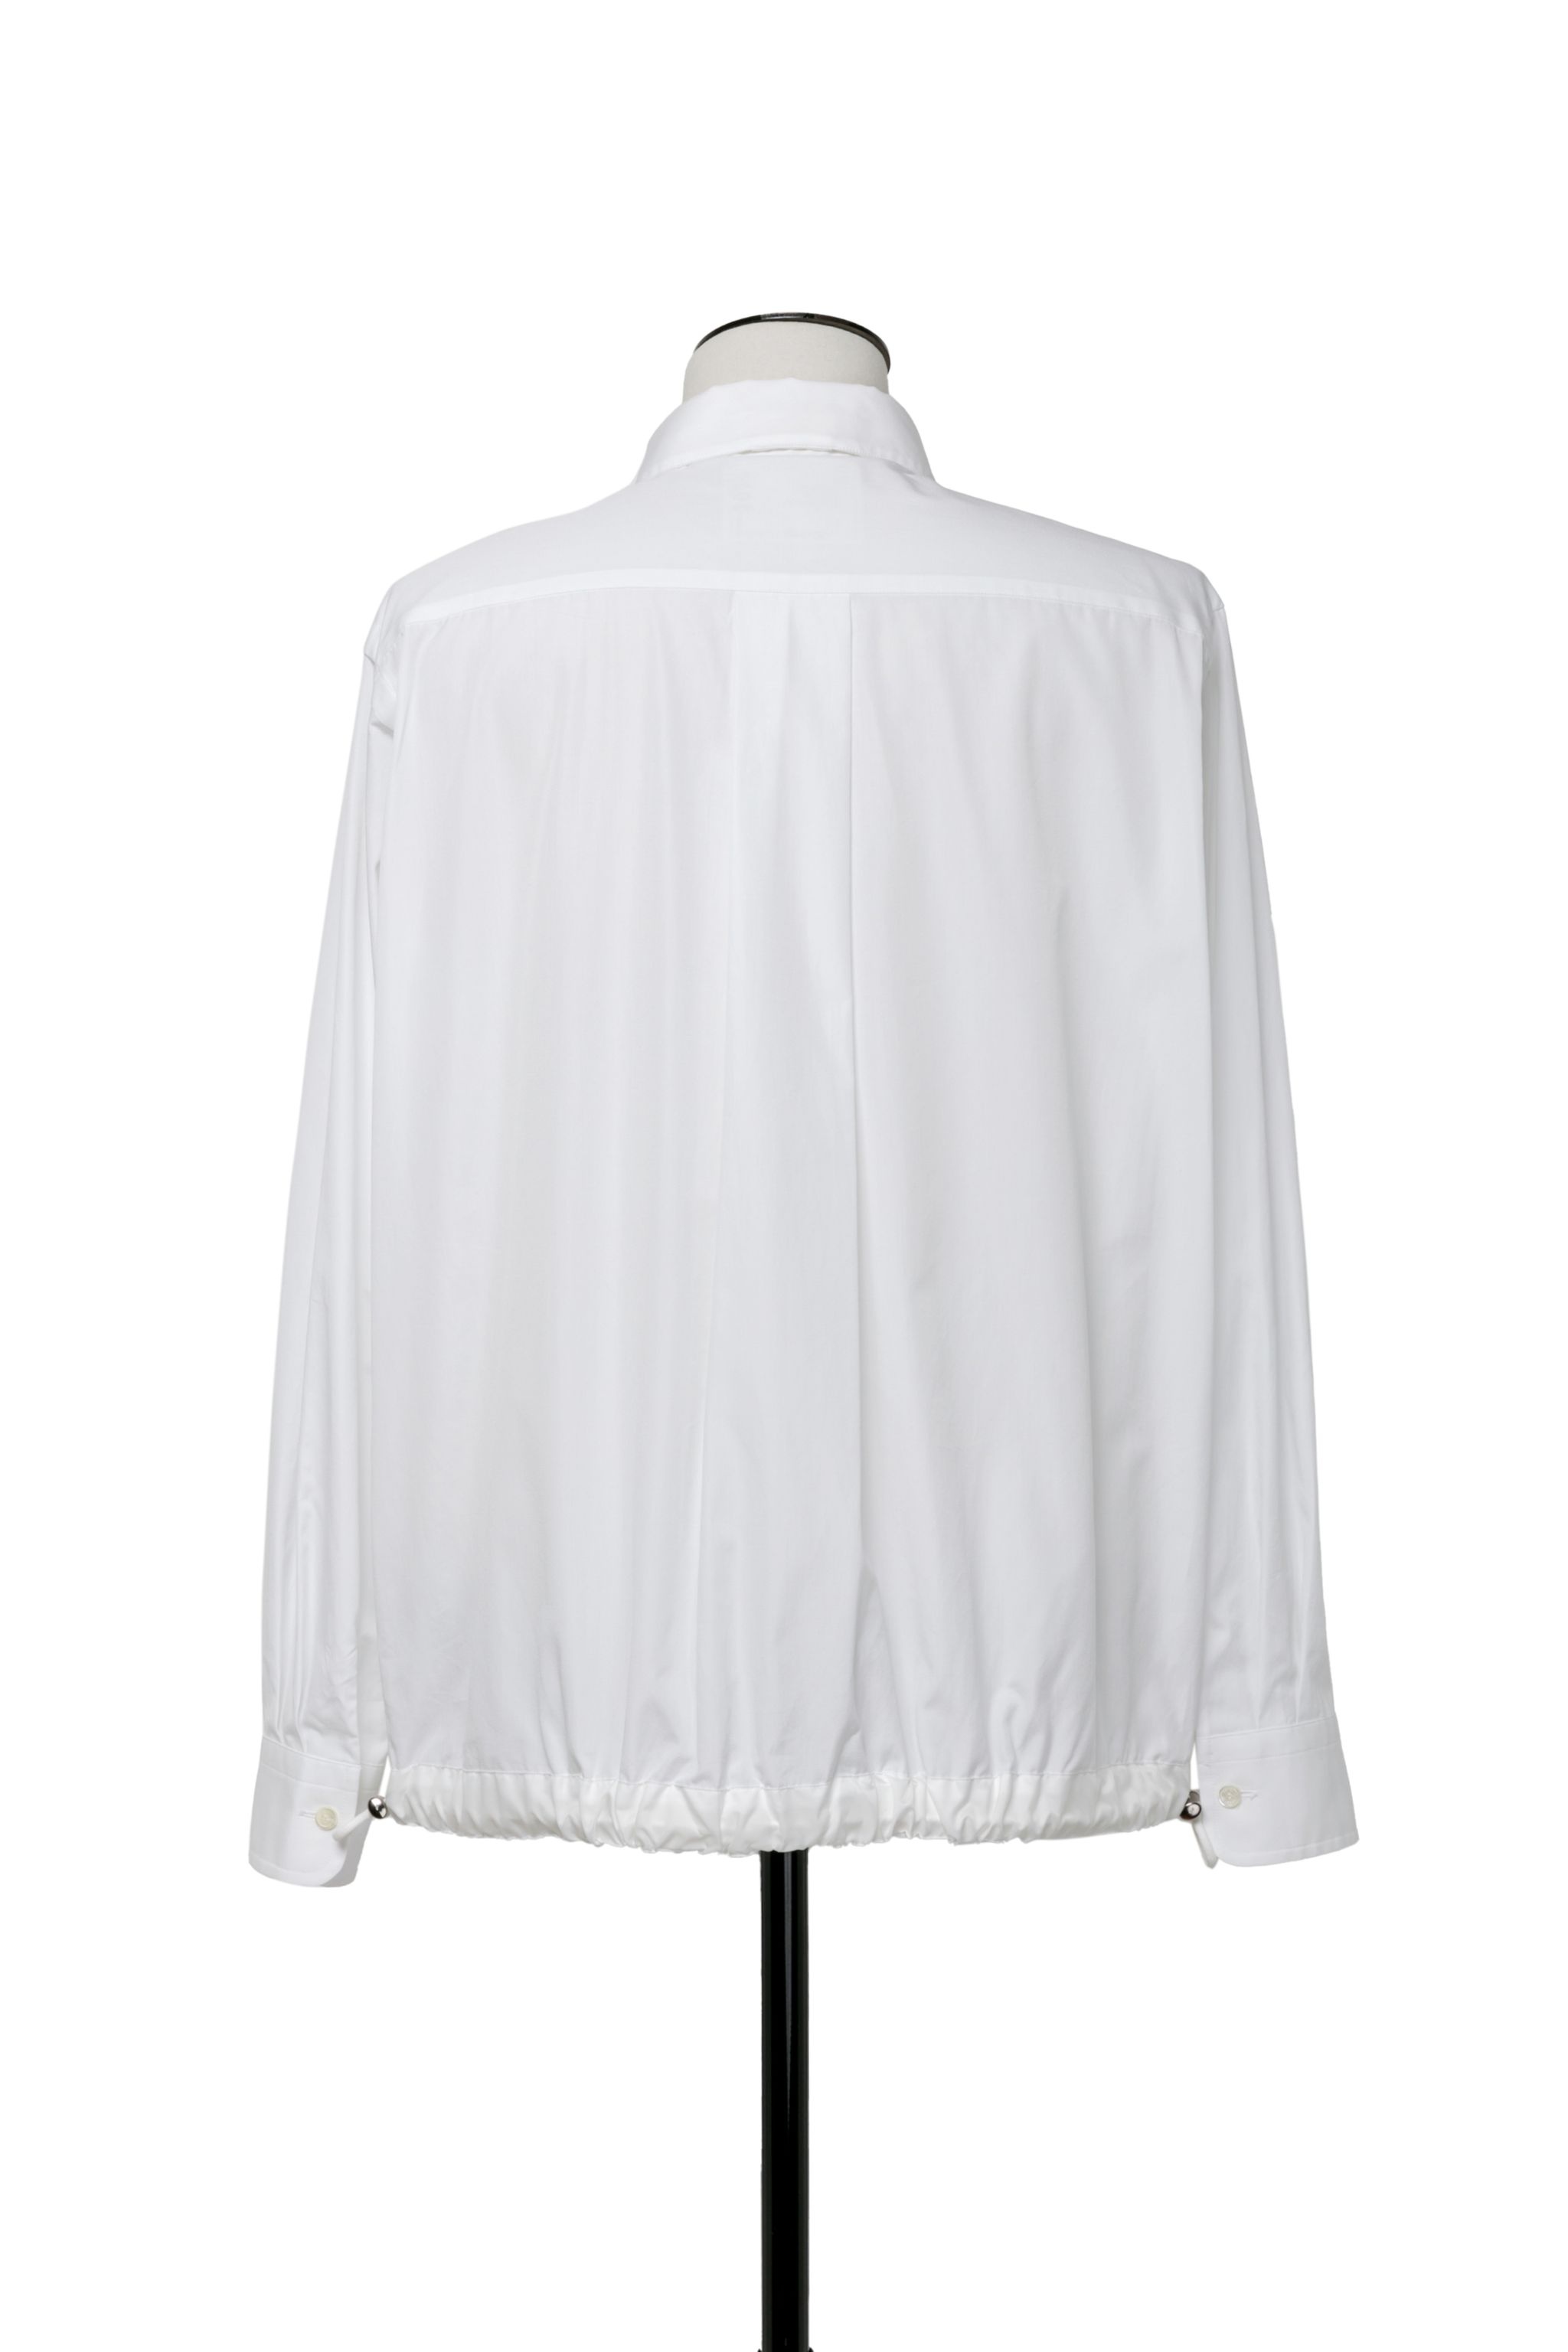 Thomas Mason s Cotton Poplin Shirt - 3